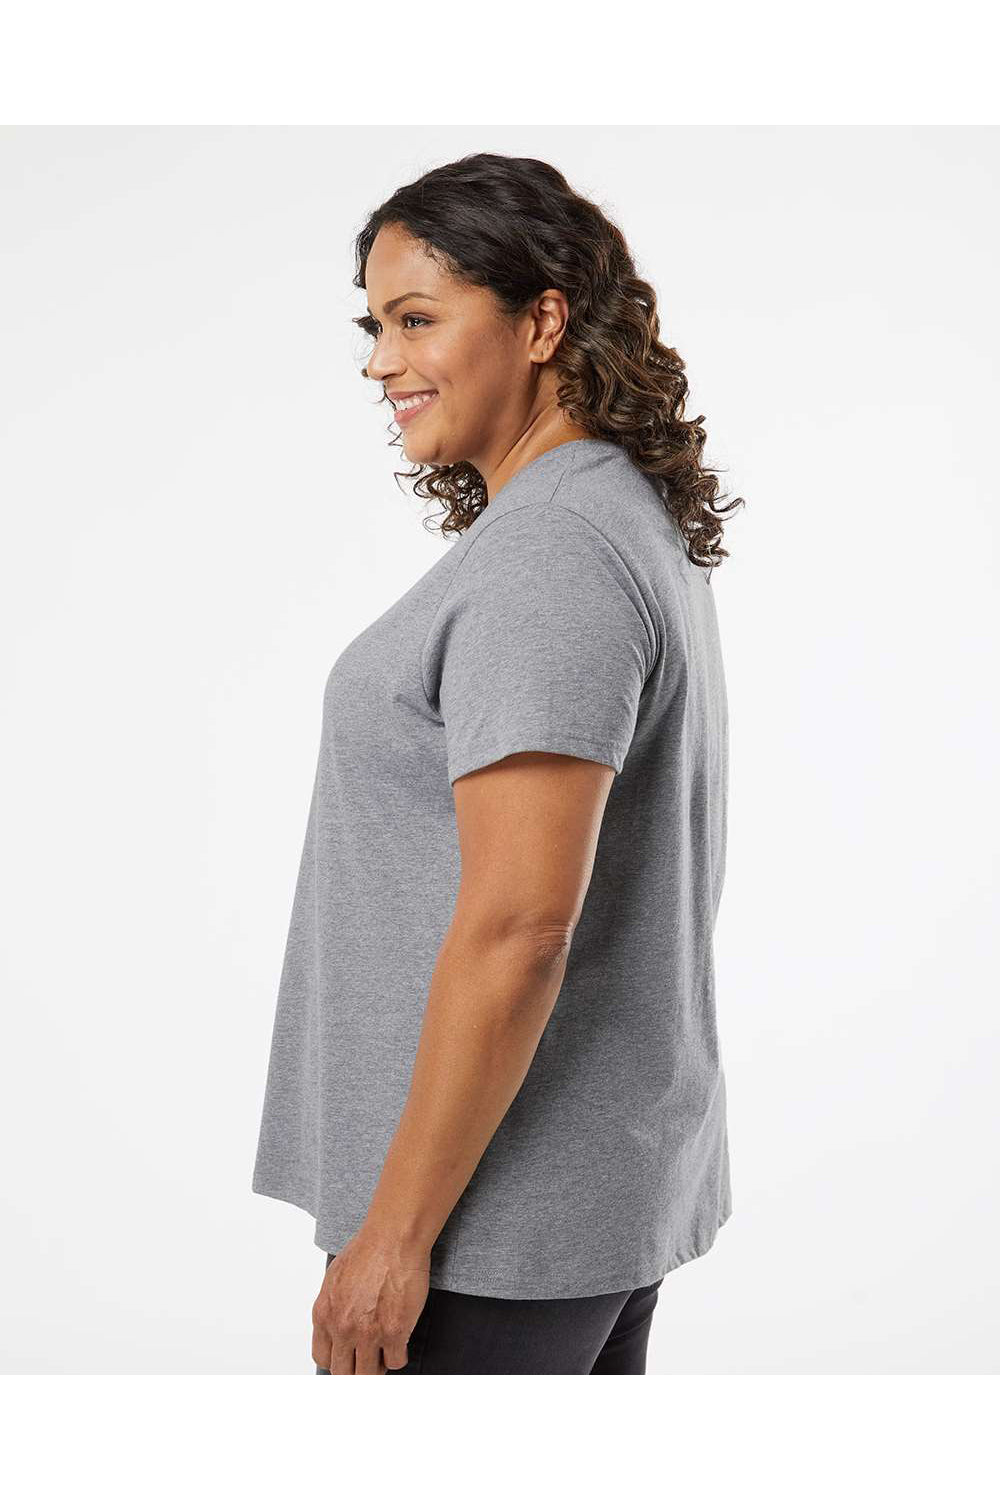 LAT 3816 Womens Curvy Collection Fine Jersey Short Sleeve Crewneck T-Shirt Heather Granite Grey Model Side